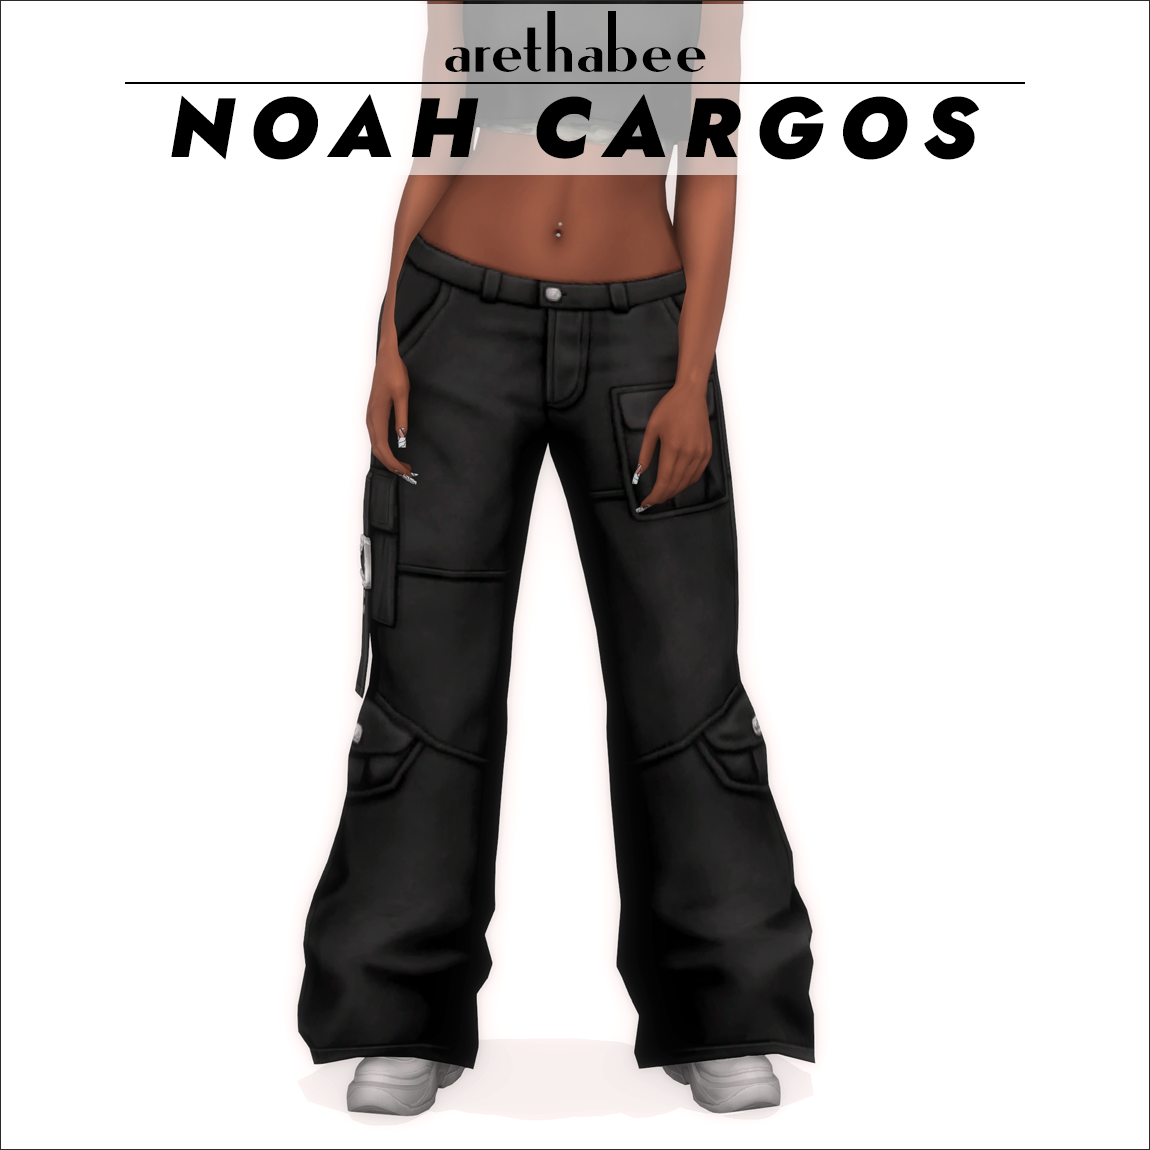 Noah Cargos project avatar